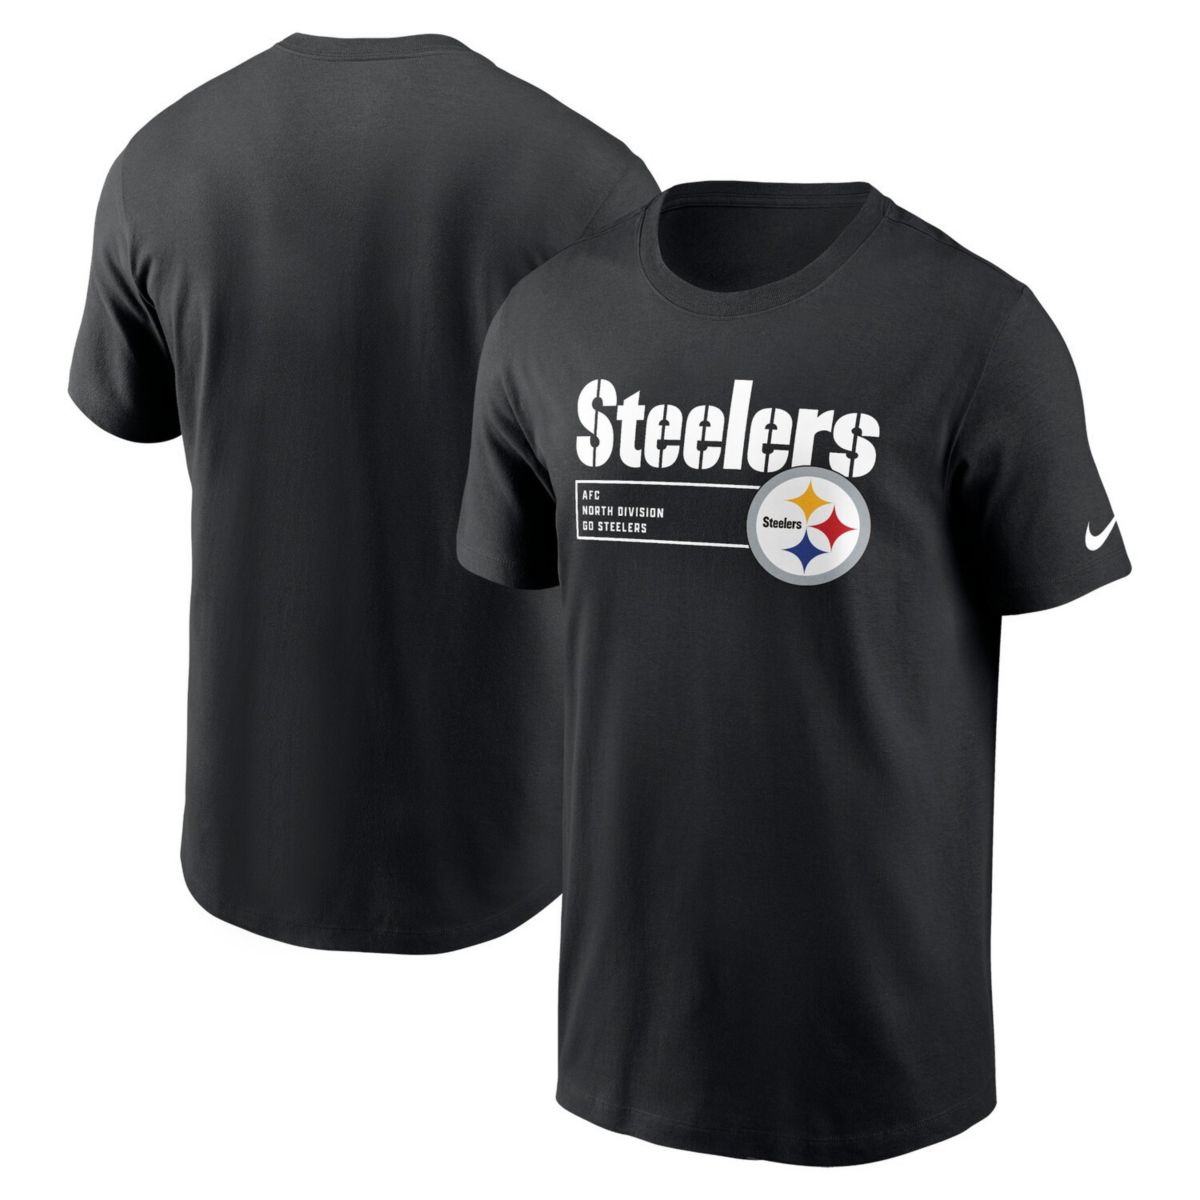 Men's Nike Black Pittsburgh Steelers Division Essential T-Shirt Nitro USA